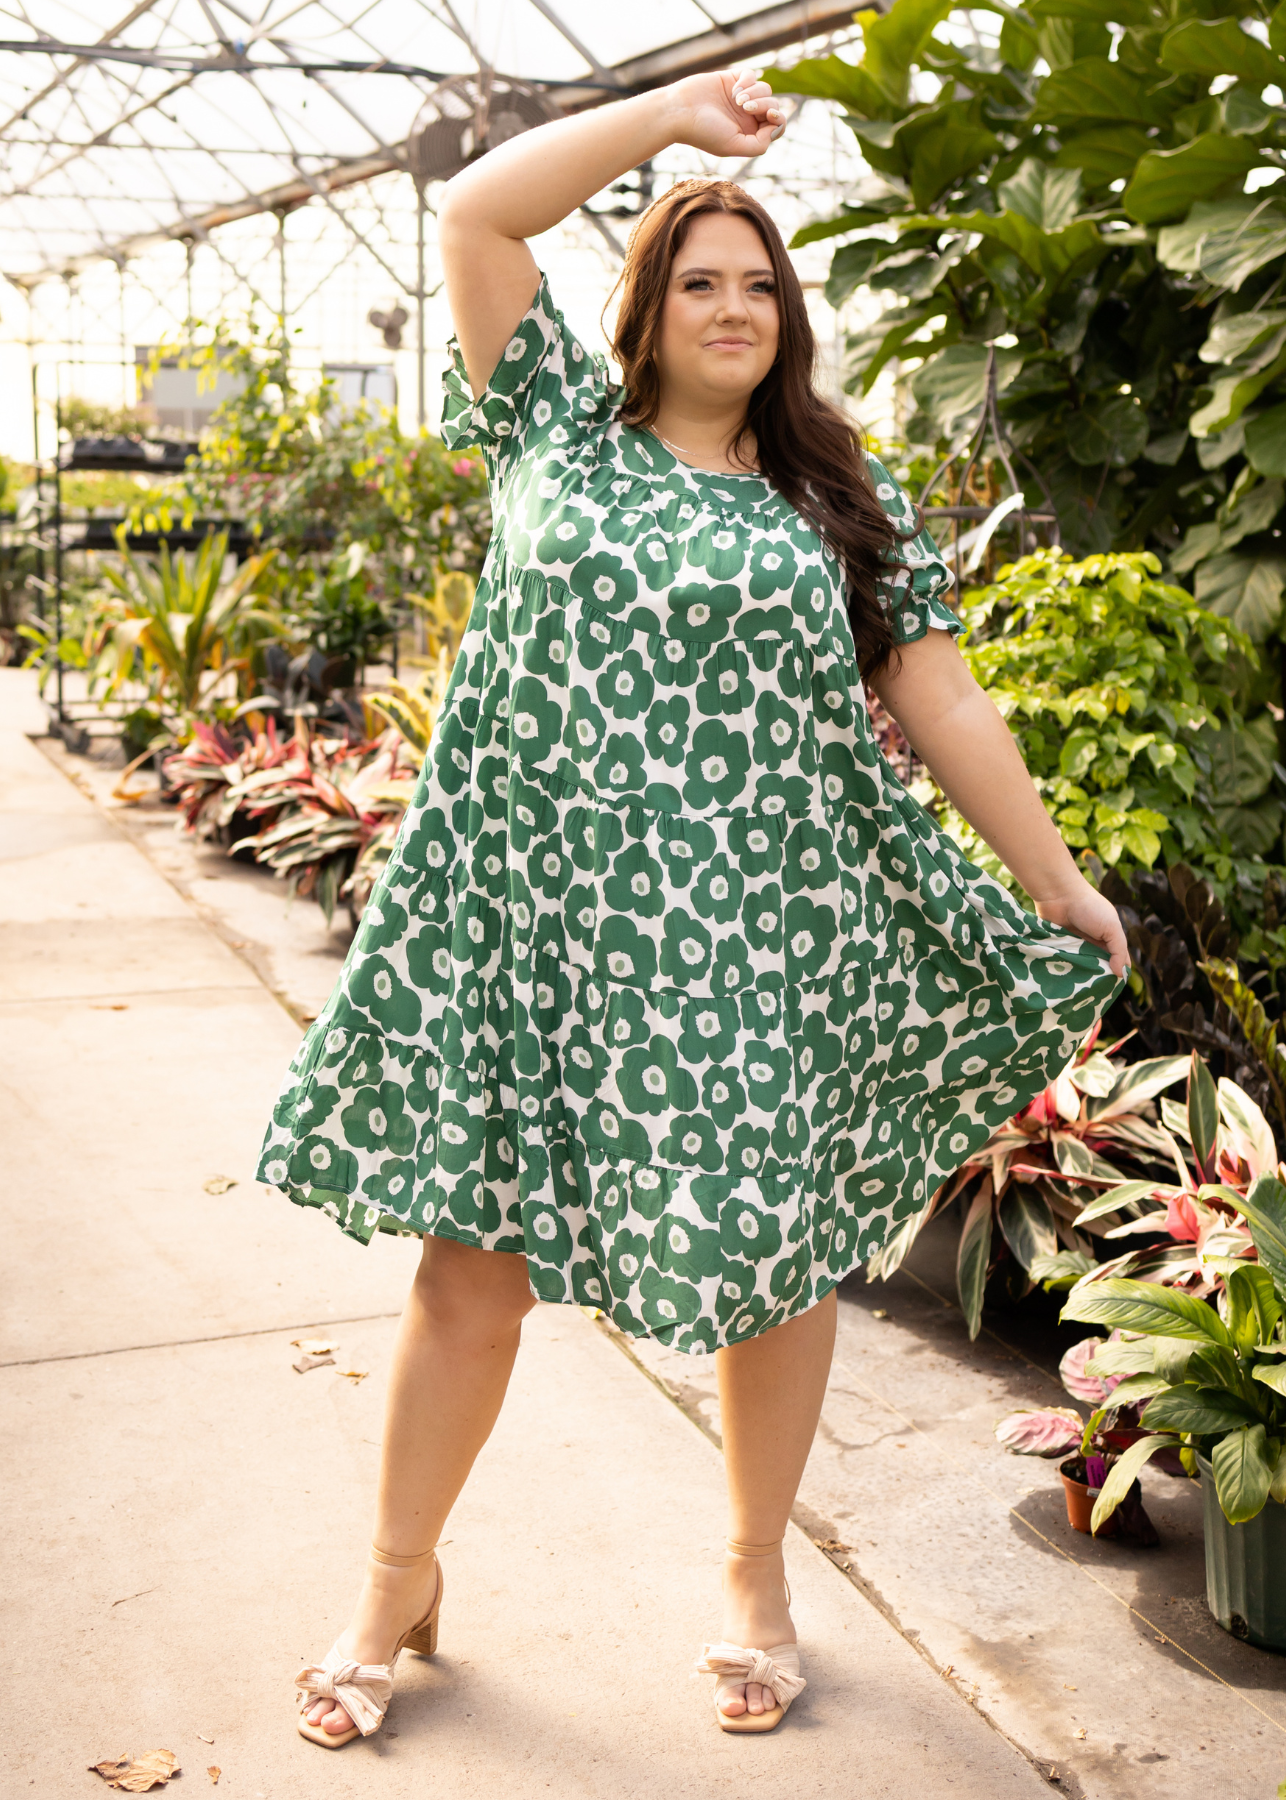 Plus size green floral dress